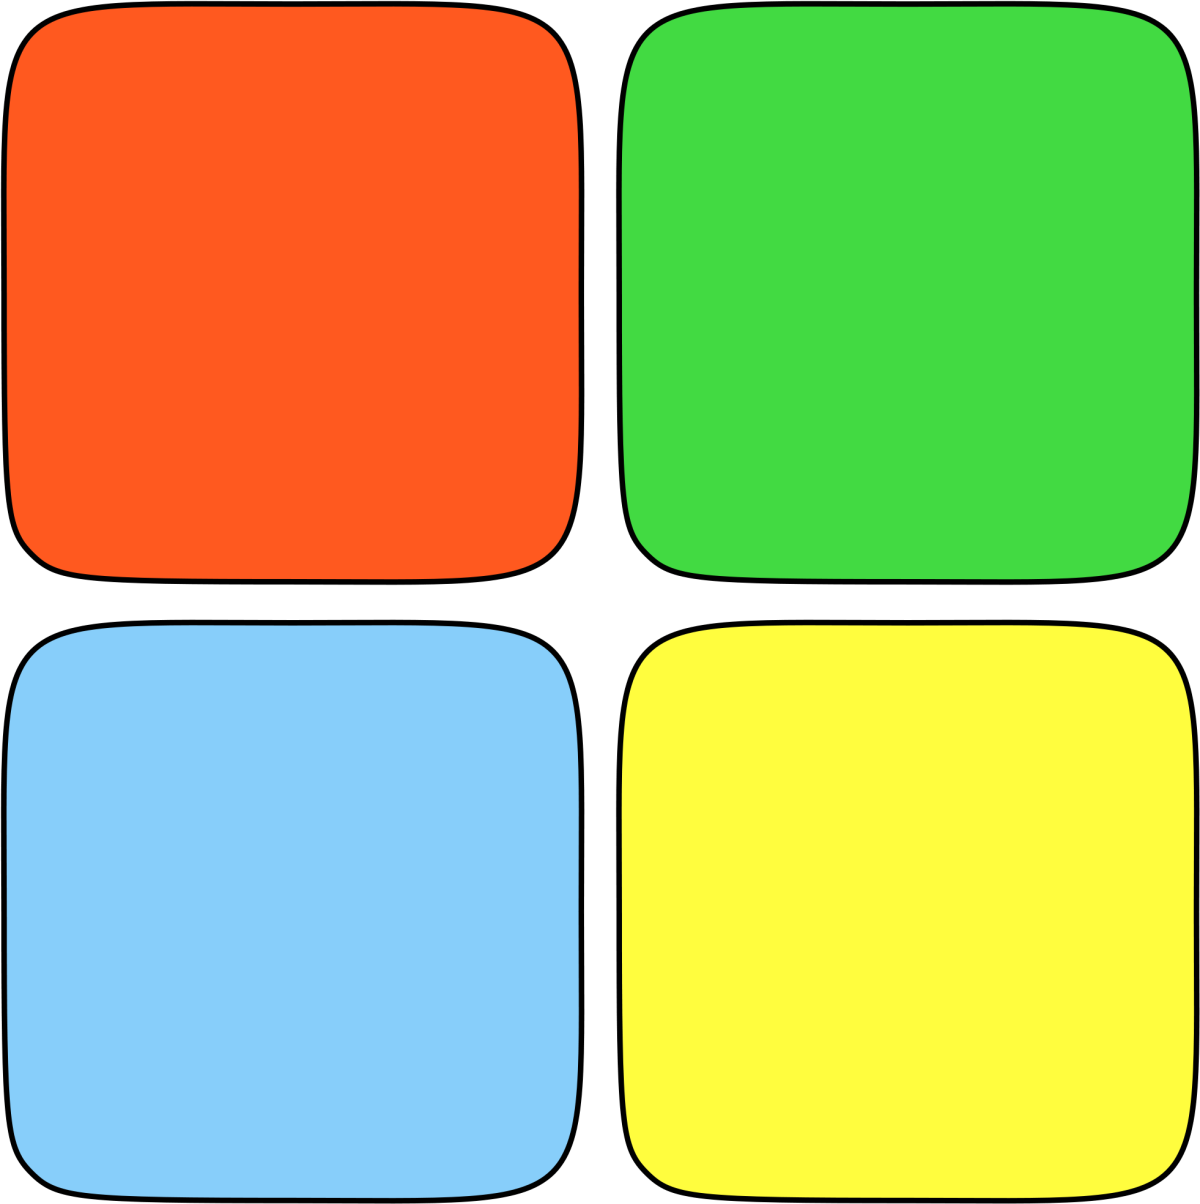 Картинки квадрата 4 4. Цветные квадраты. Разноцветные квадратики. Квадраты цветные для детей. Цветные квадратики для детей.